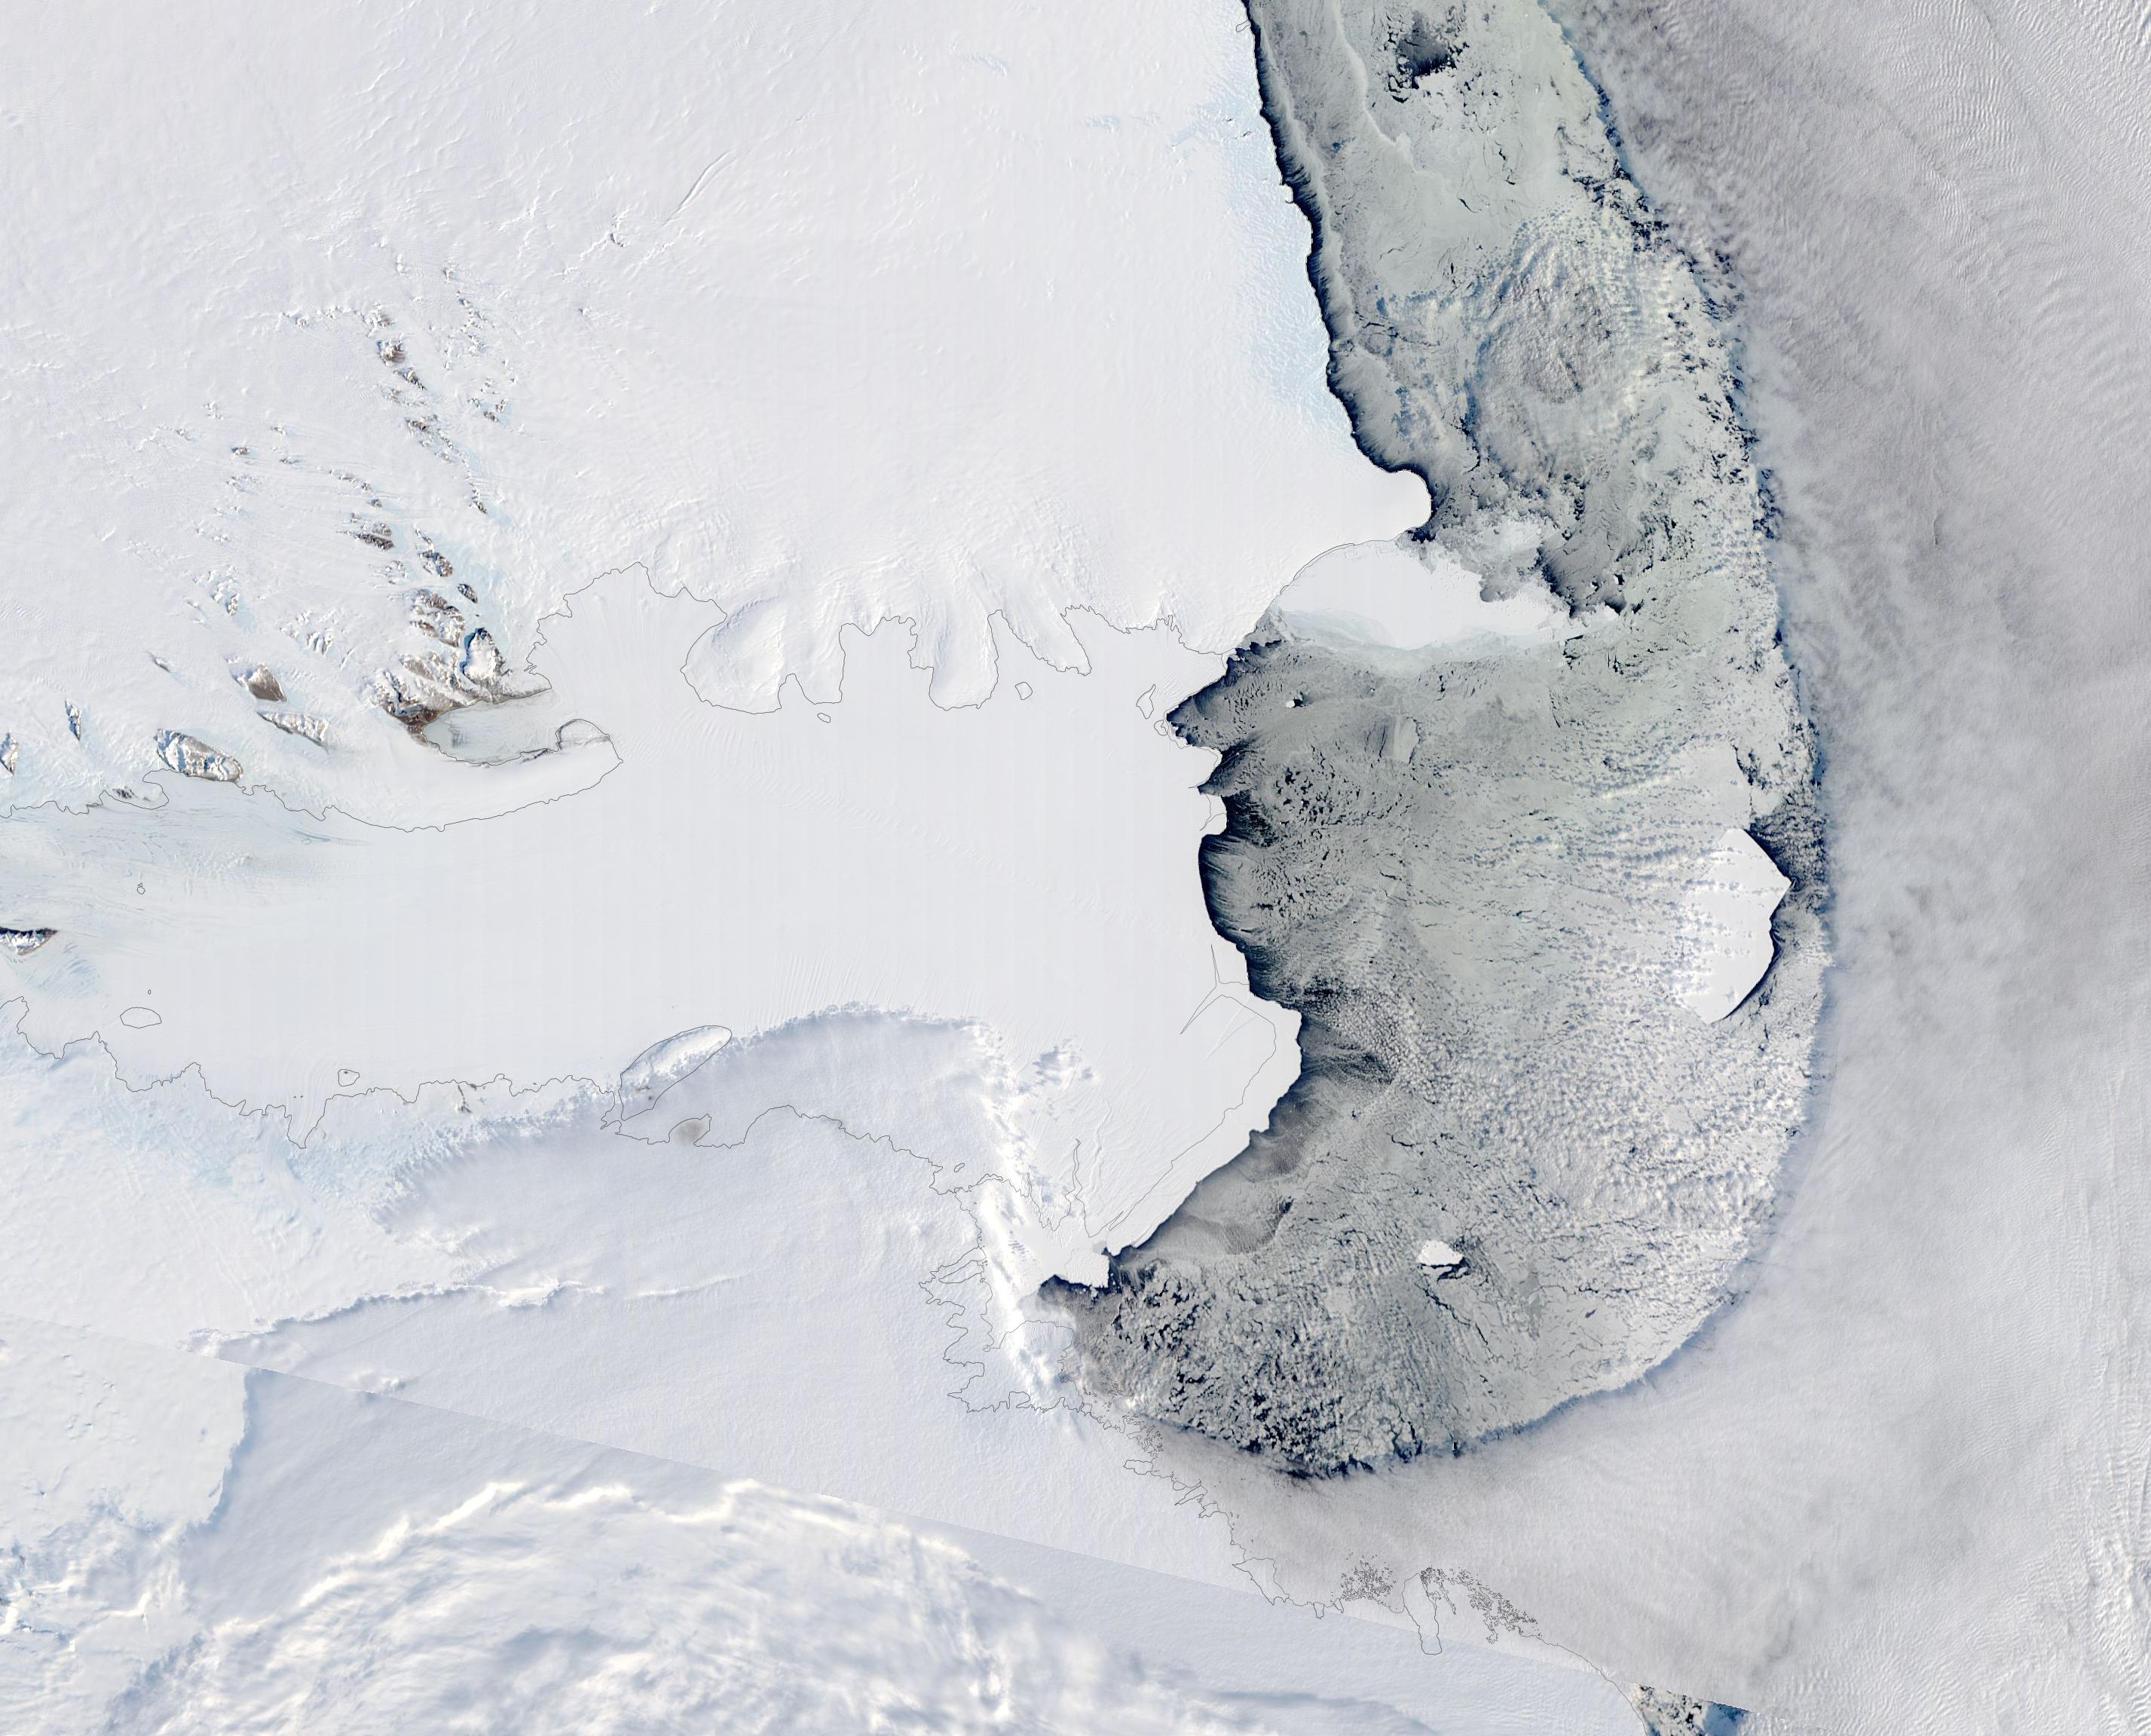 Антарктида безо льда